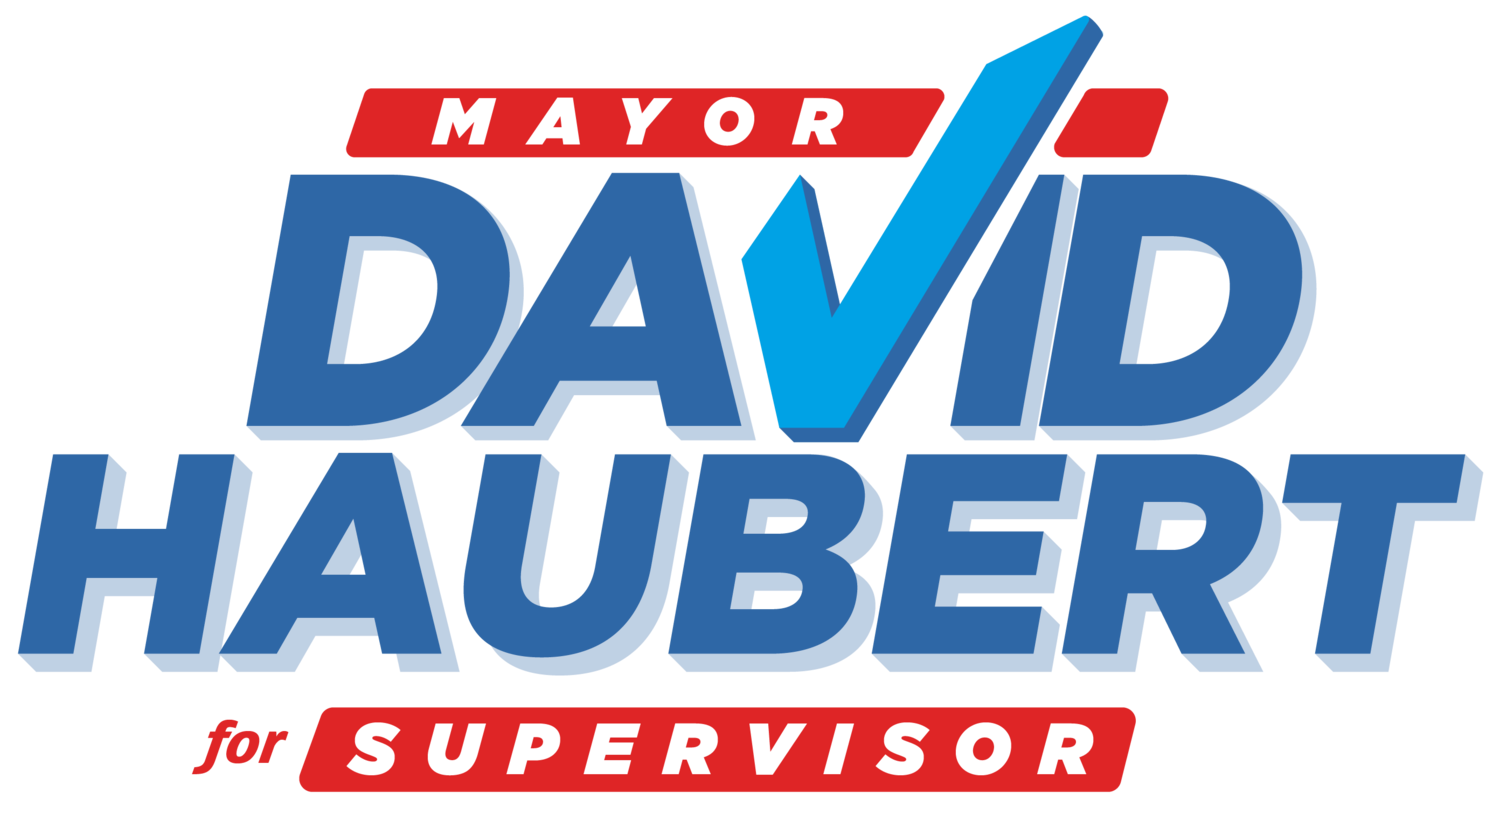 David Haubert for Supervisor